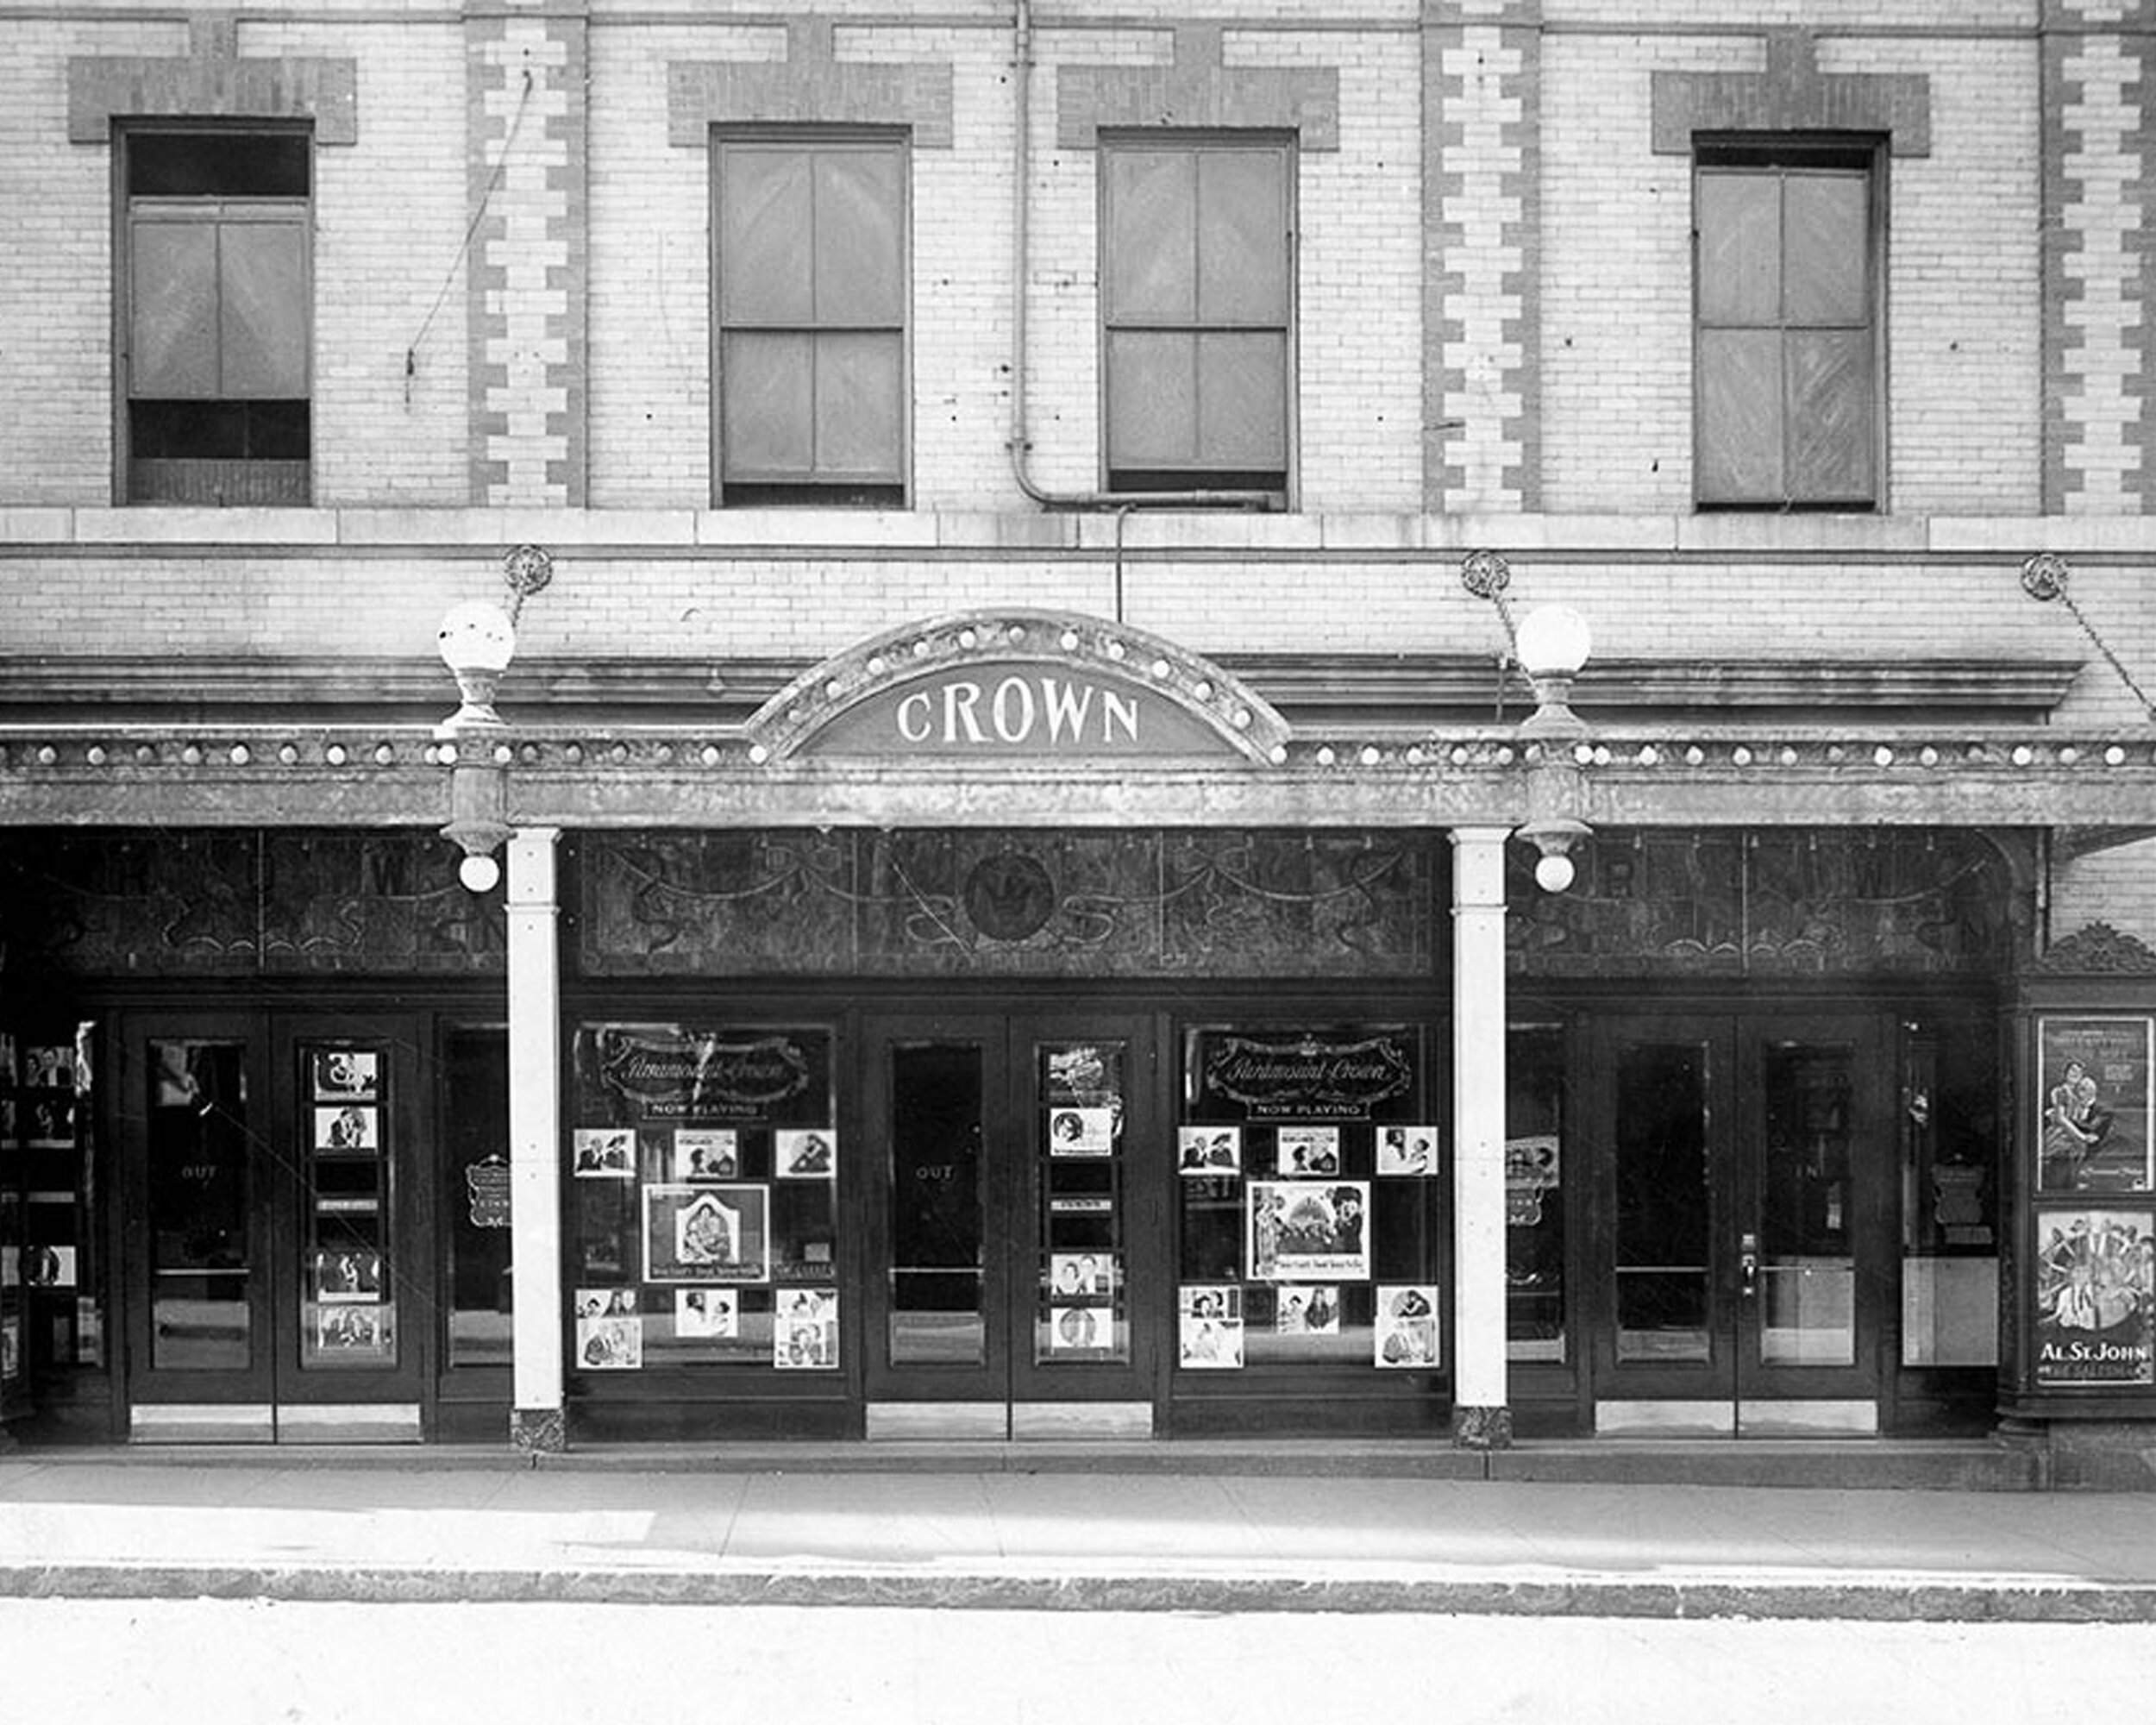 The Crown_Manchester NH USA_01 Original Theater Facade.jpg